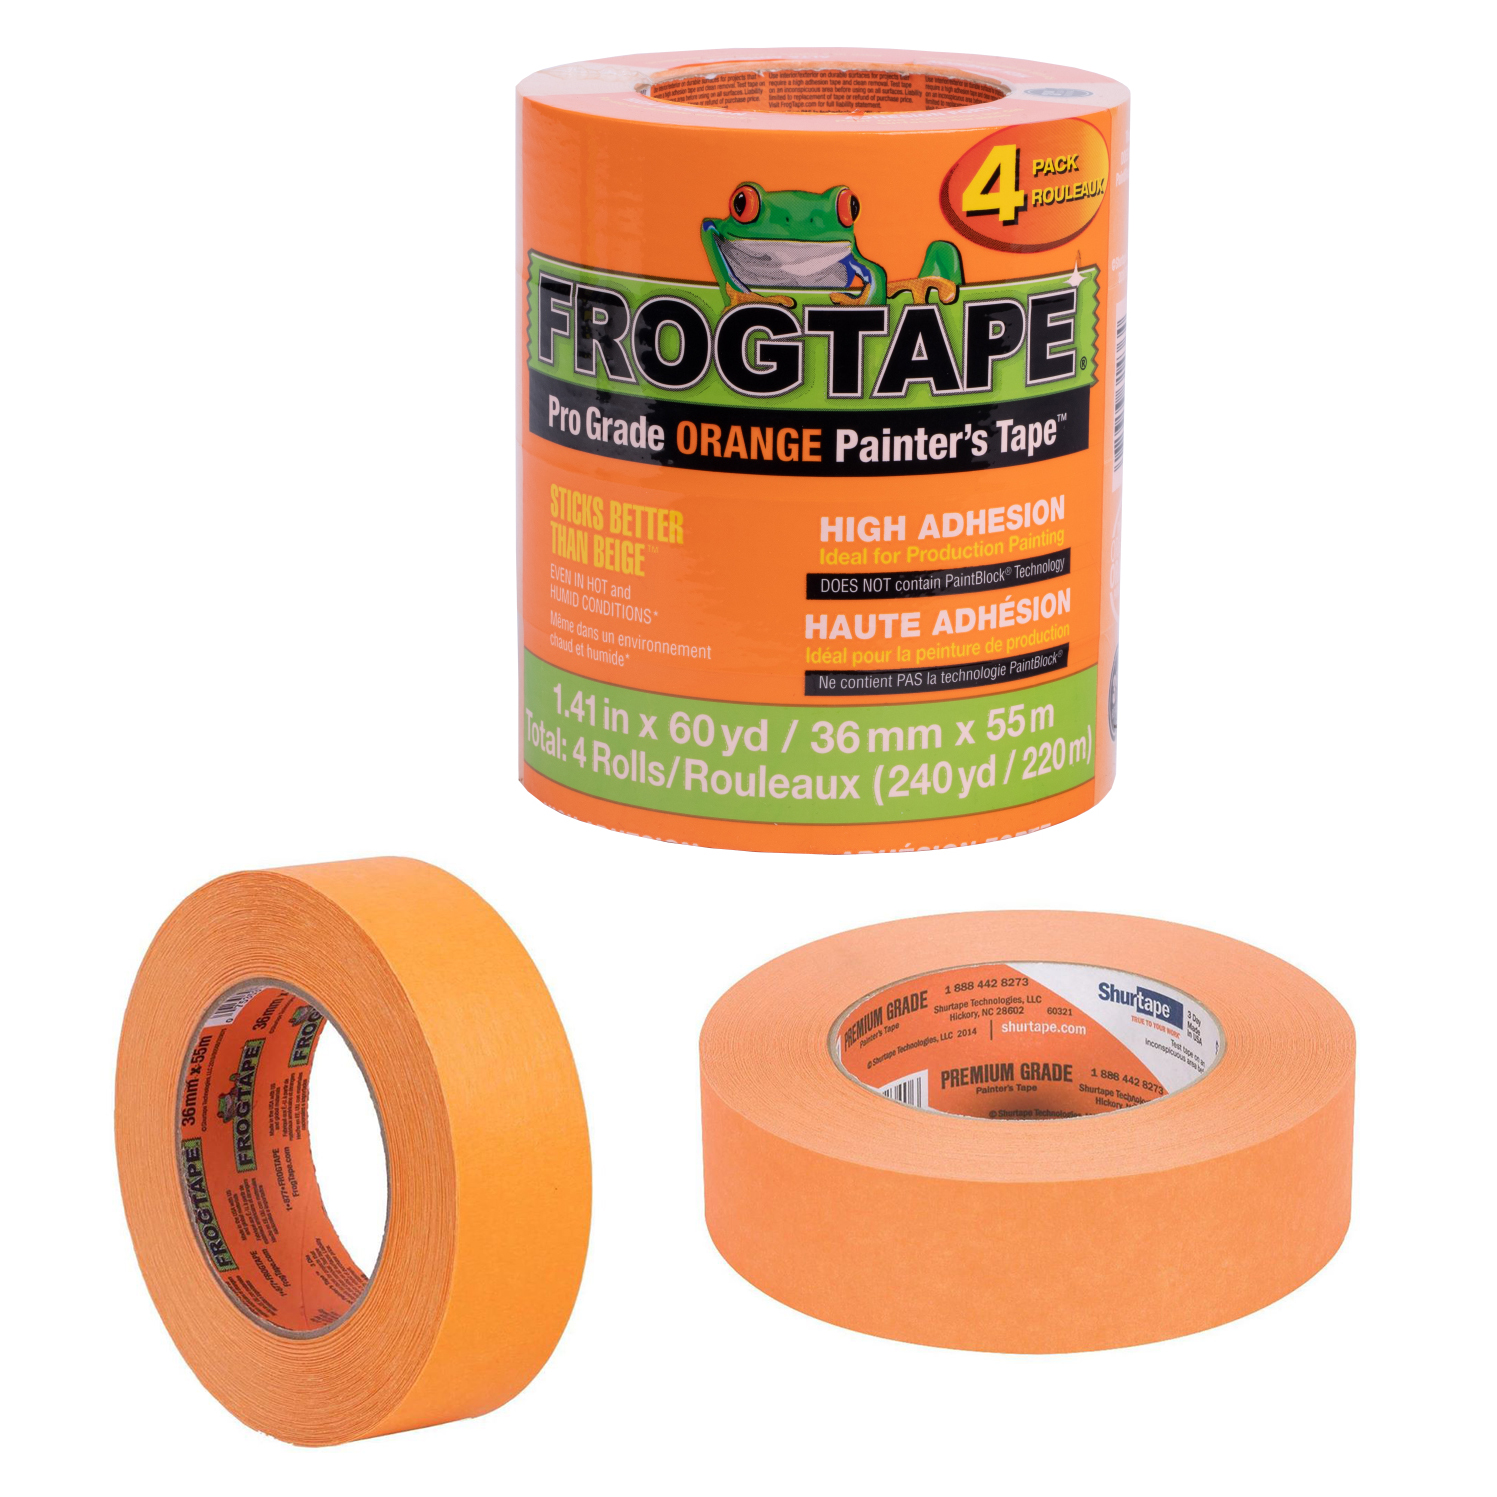 0.94 in Shurtape CP-199 FrogTape Brand Pro Grade Painter's Tape x 60 yds Oran 